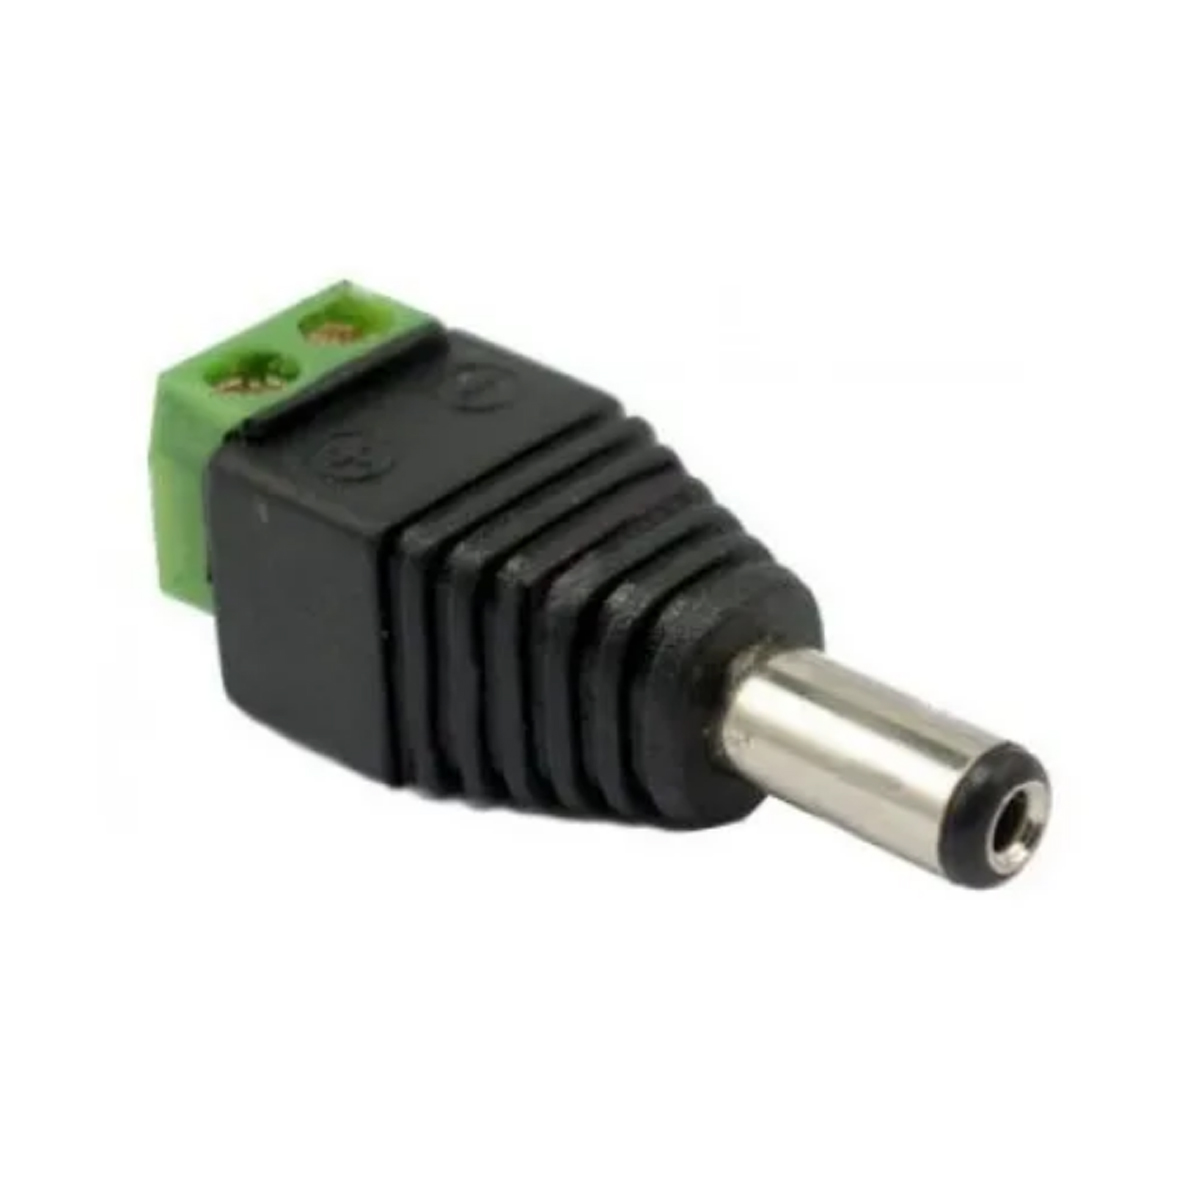 De 1 a 4 vías de 2.1 mm Cable Divisor Conector de CC CCTV C3704 